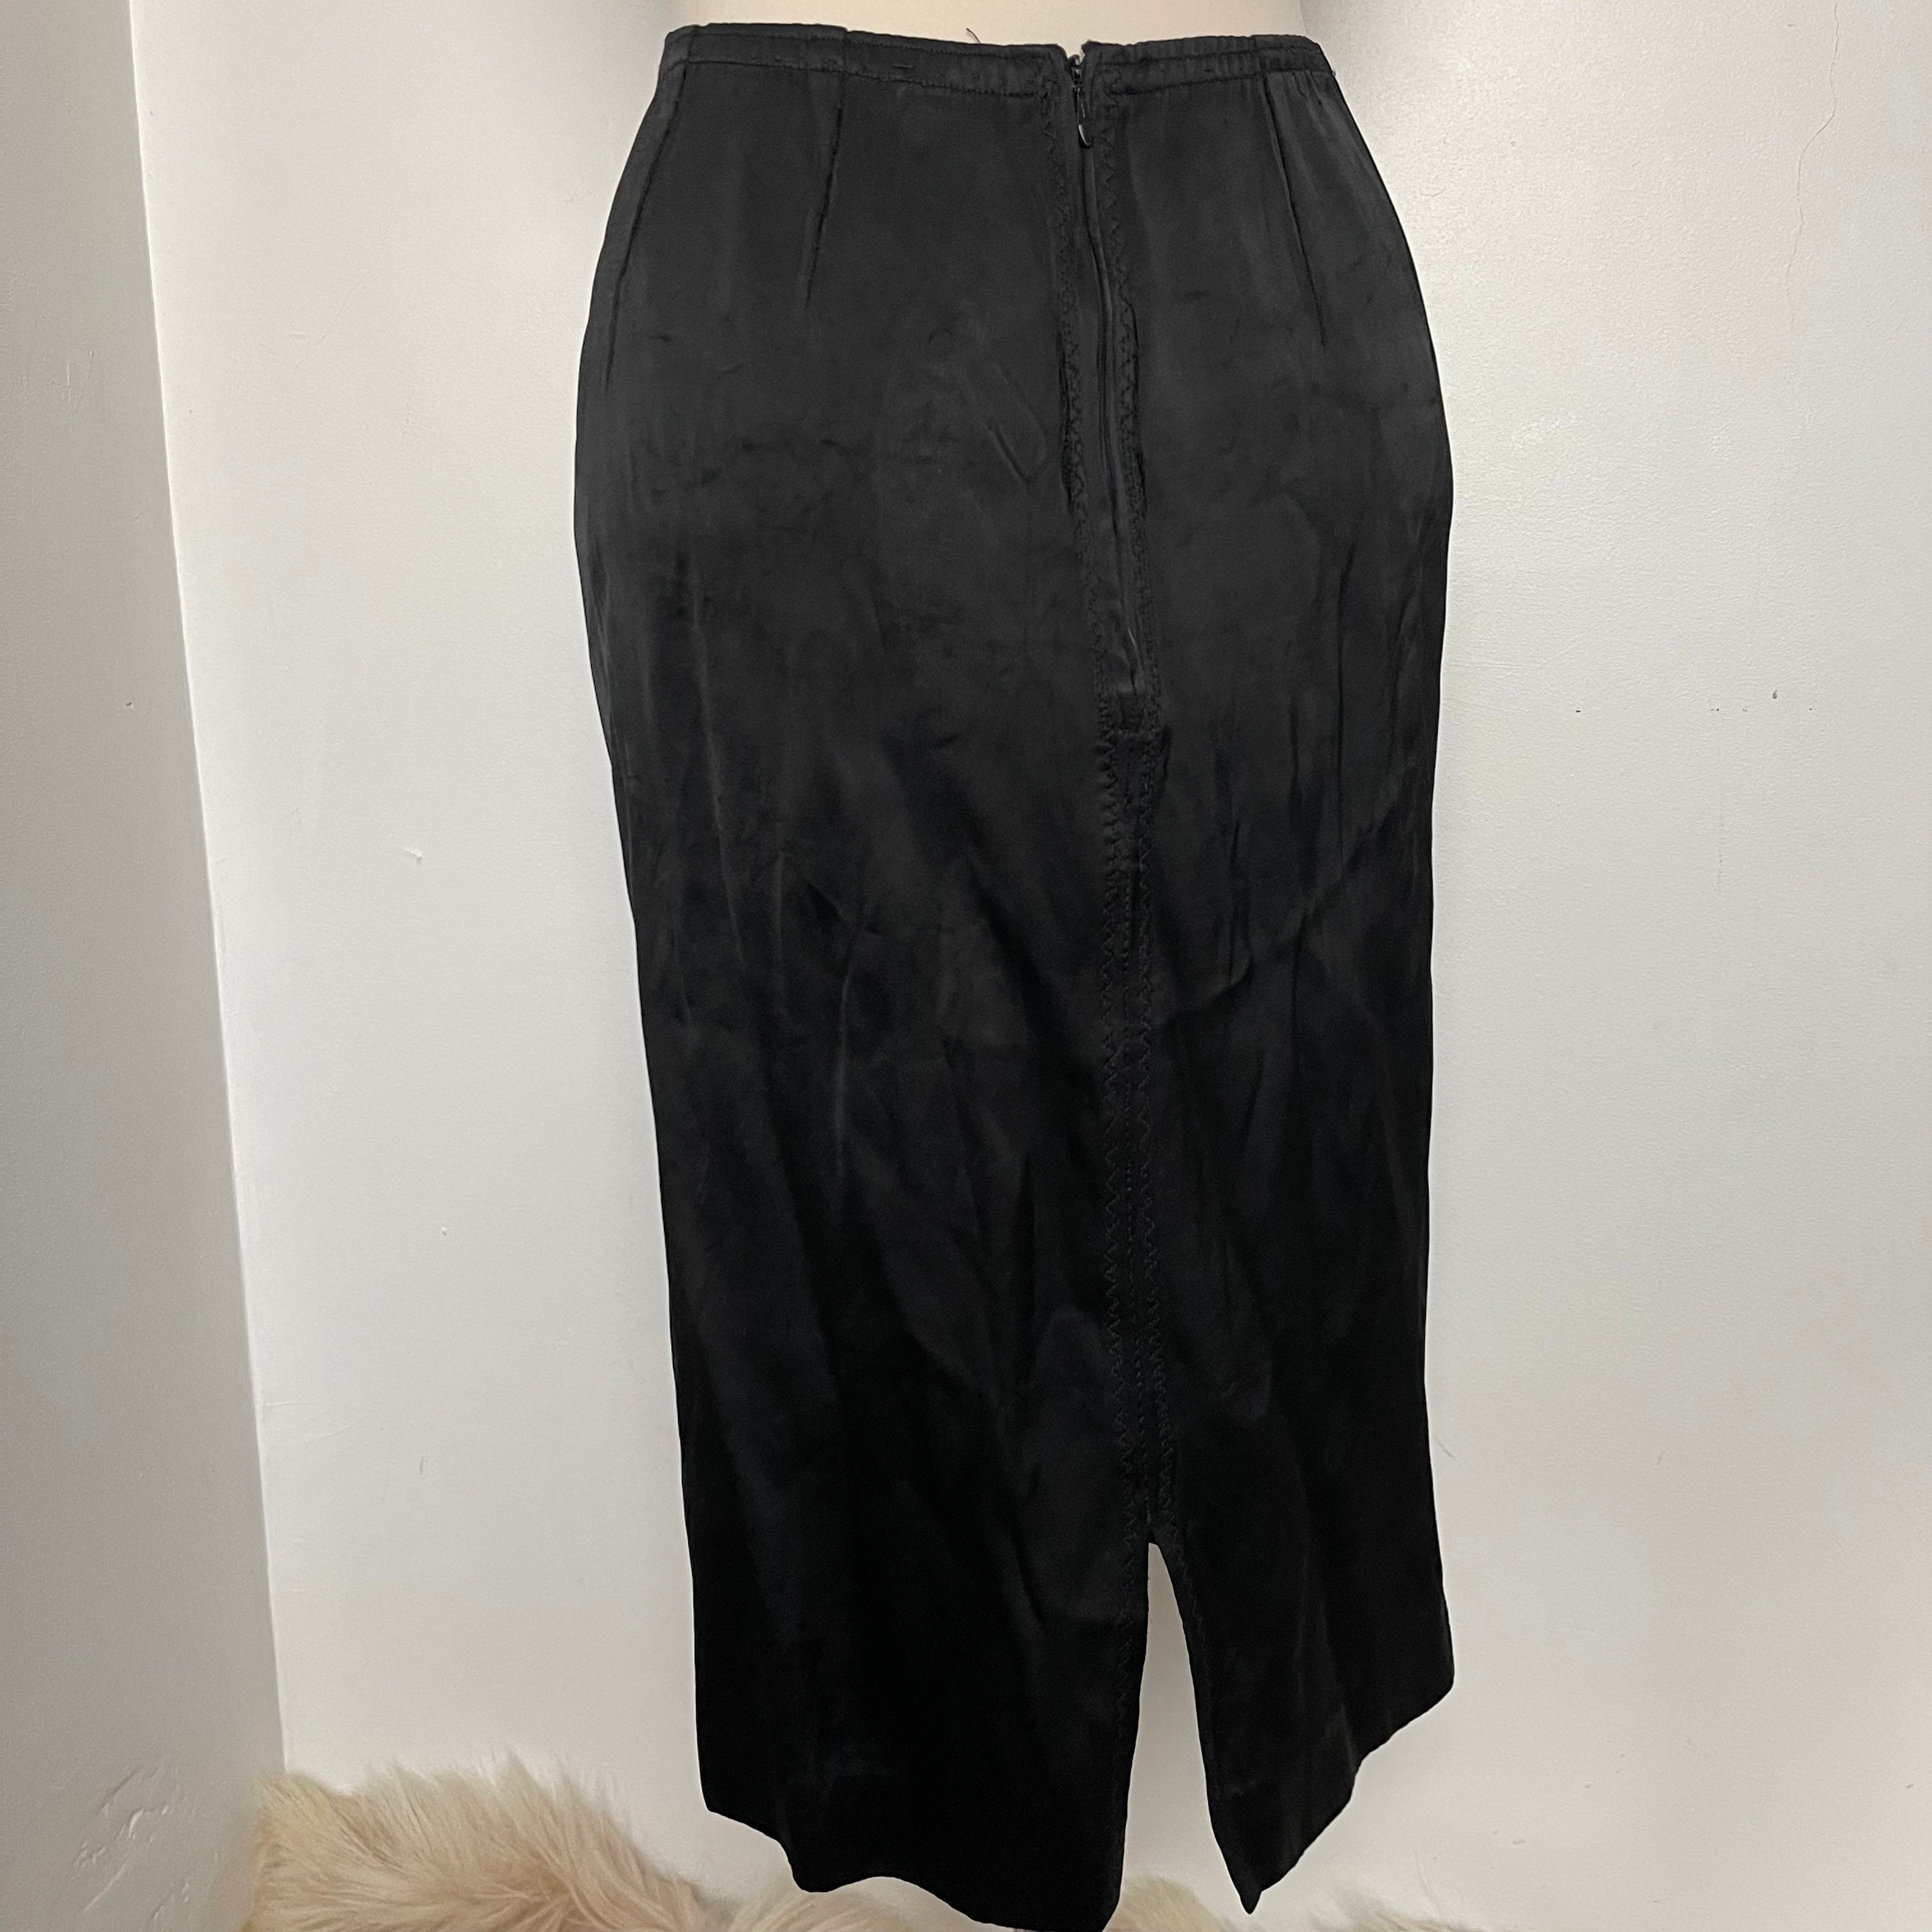 Vintage slip, half petticoat, half slip, black satin slip, nylon slip,  white petticoat, 1950s, 50s 60s pin up burlesque underwear 30” waist